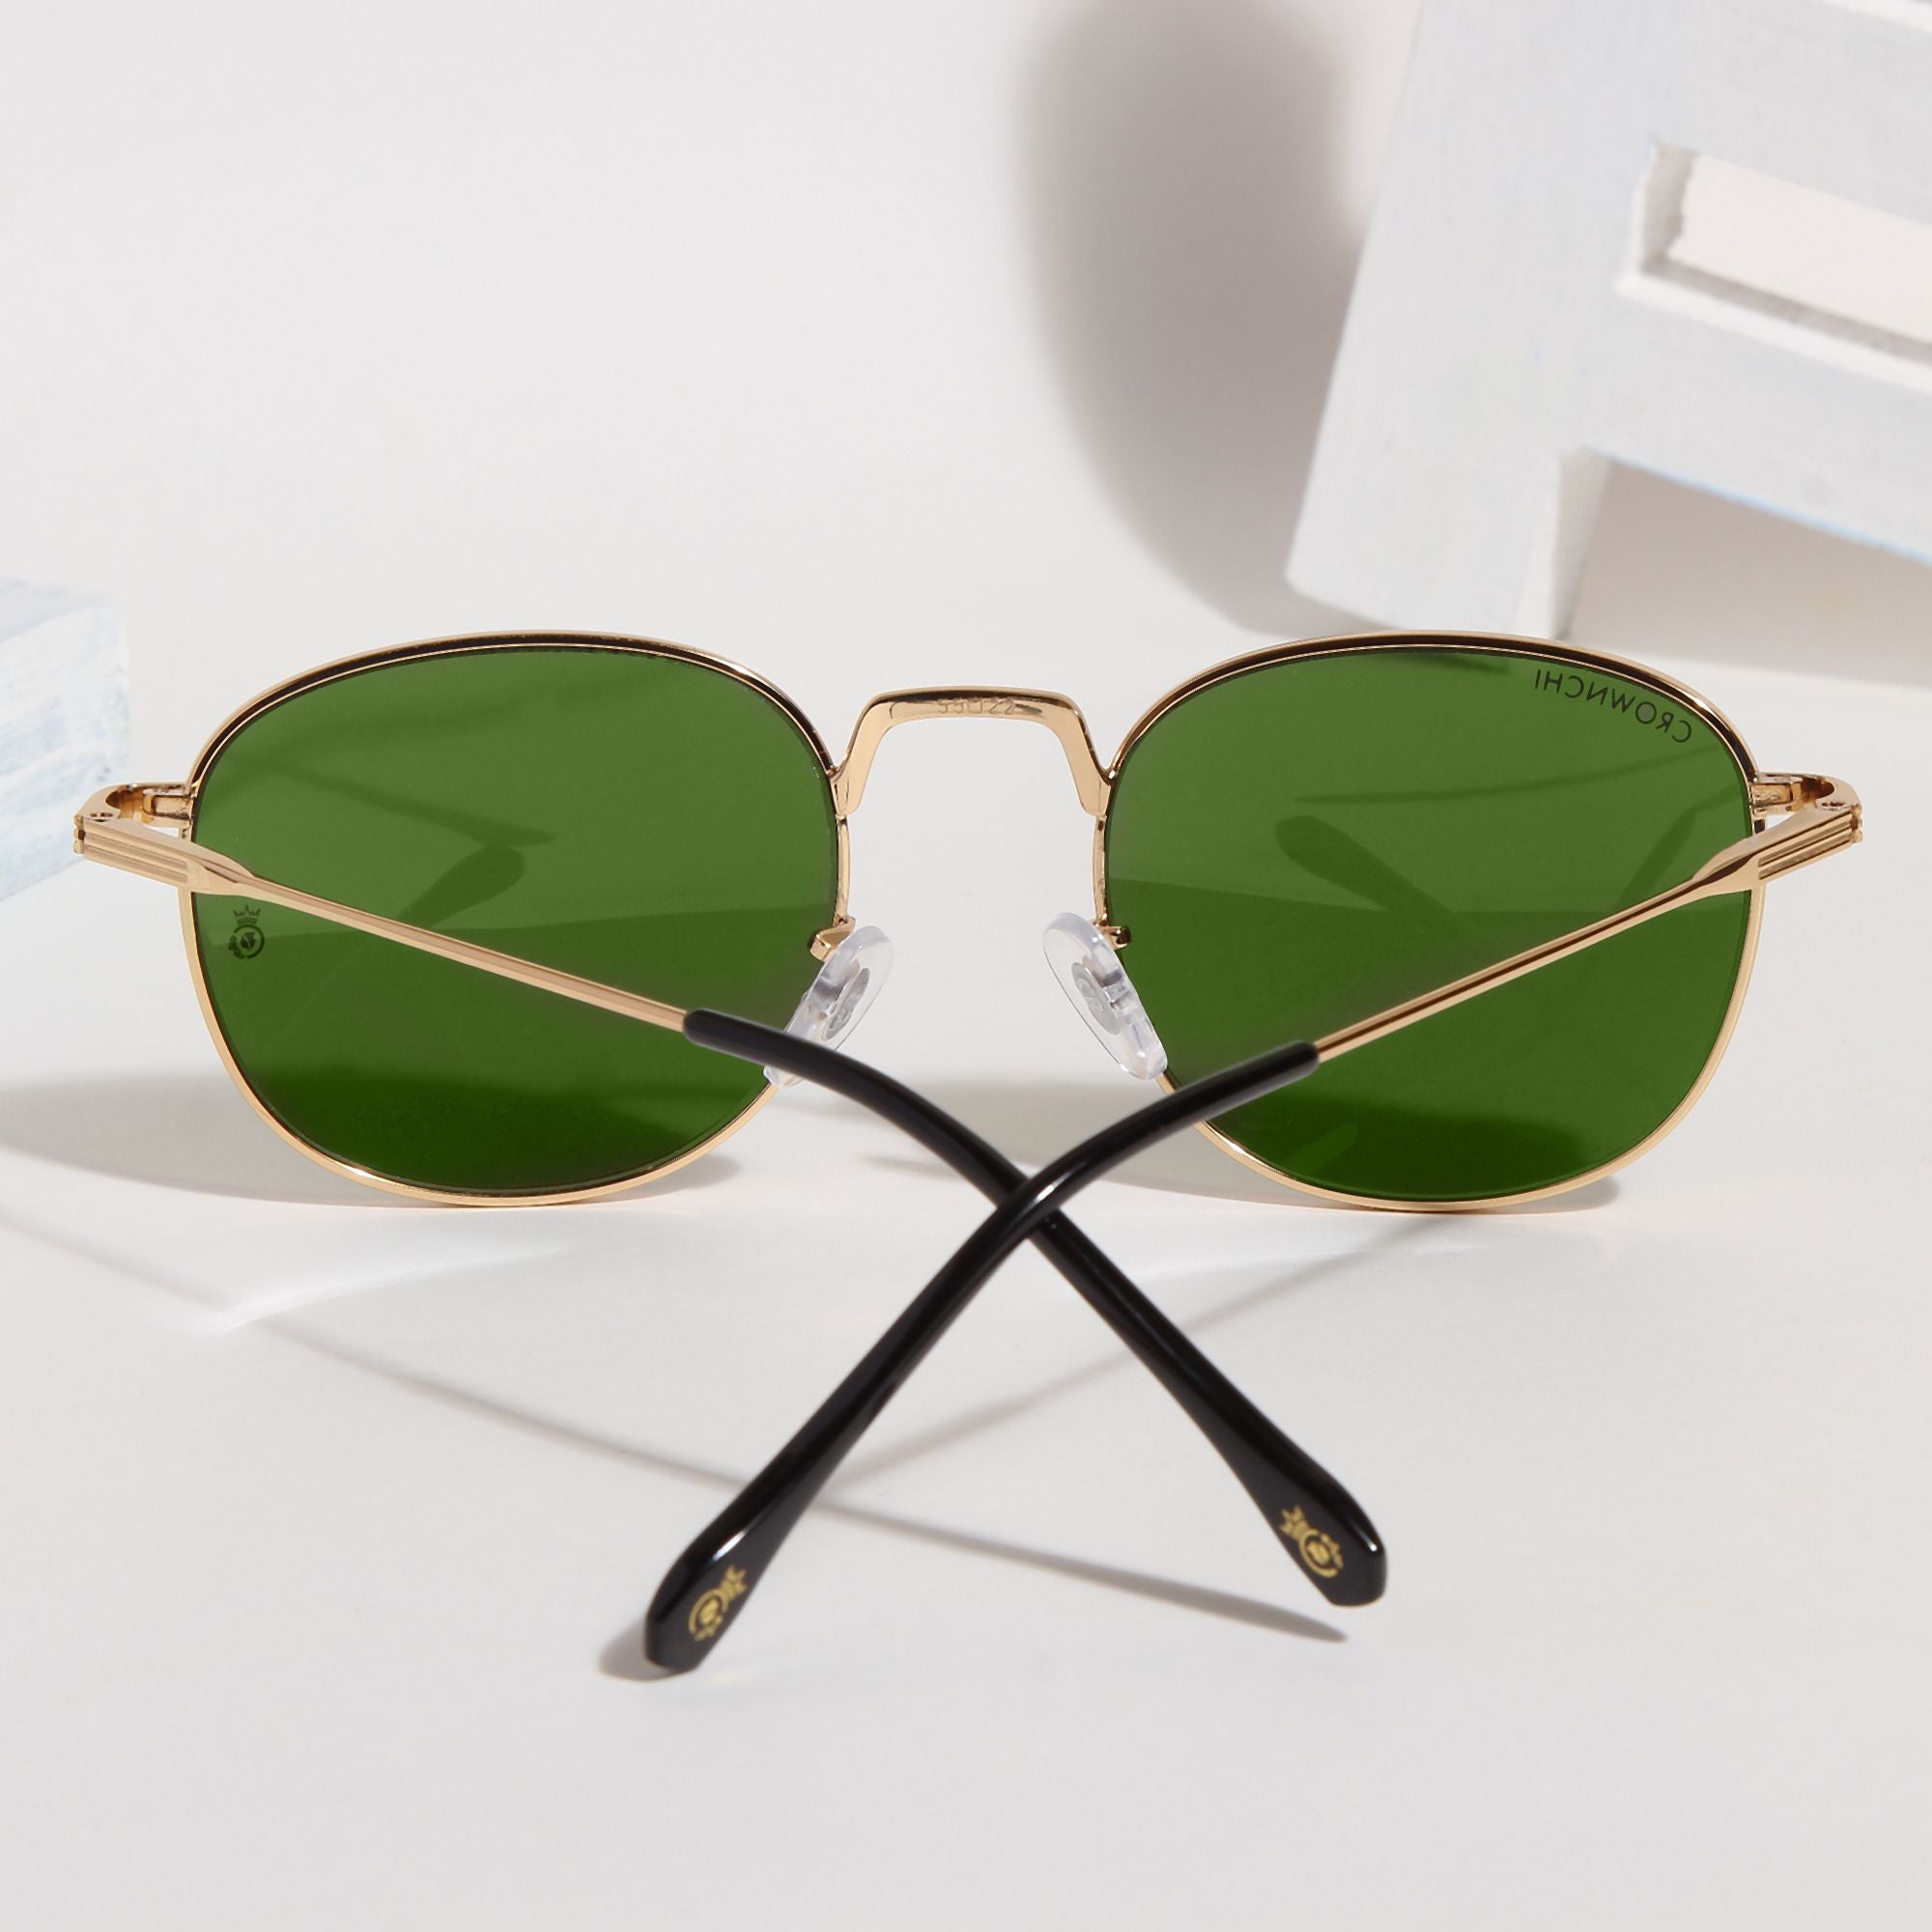 Crownchi Martin Gold Green Round Edition Sunglasses